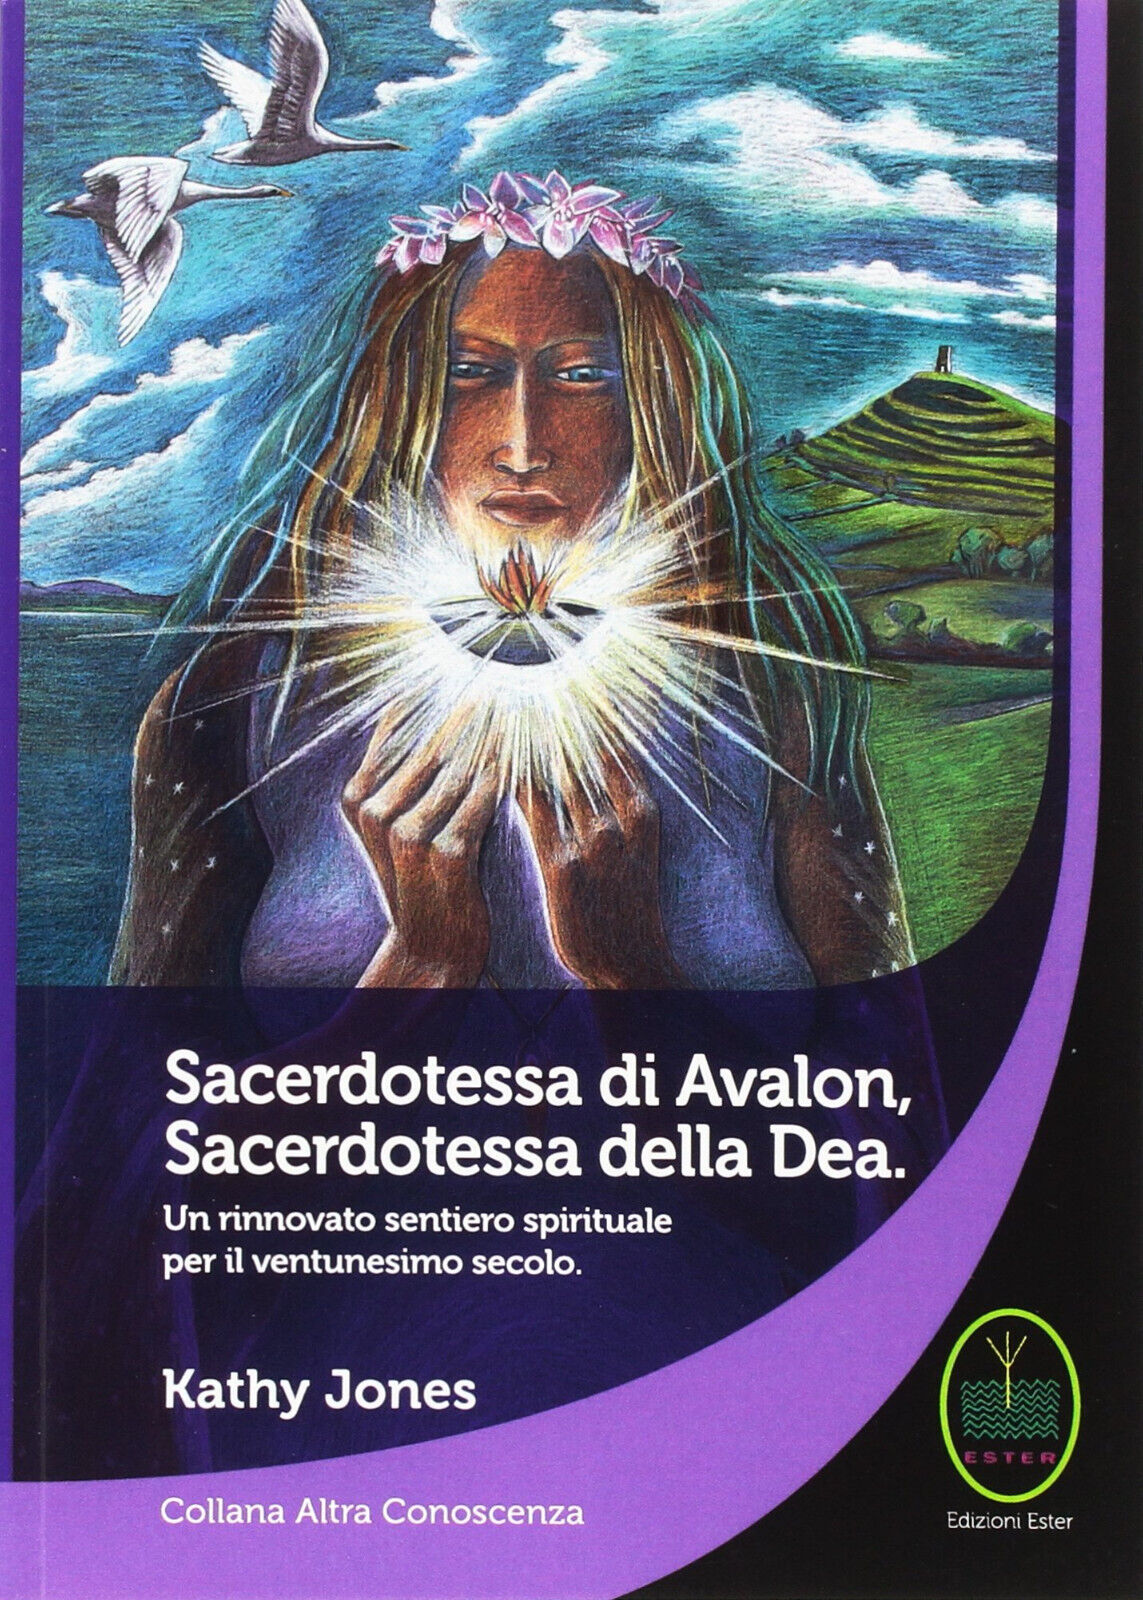 Sacerdotessa di Avalon sacerdotessa della Dea - Kathy Jones - Ester, 2014 libro usato